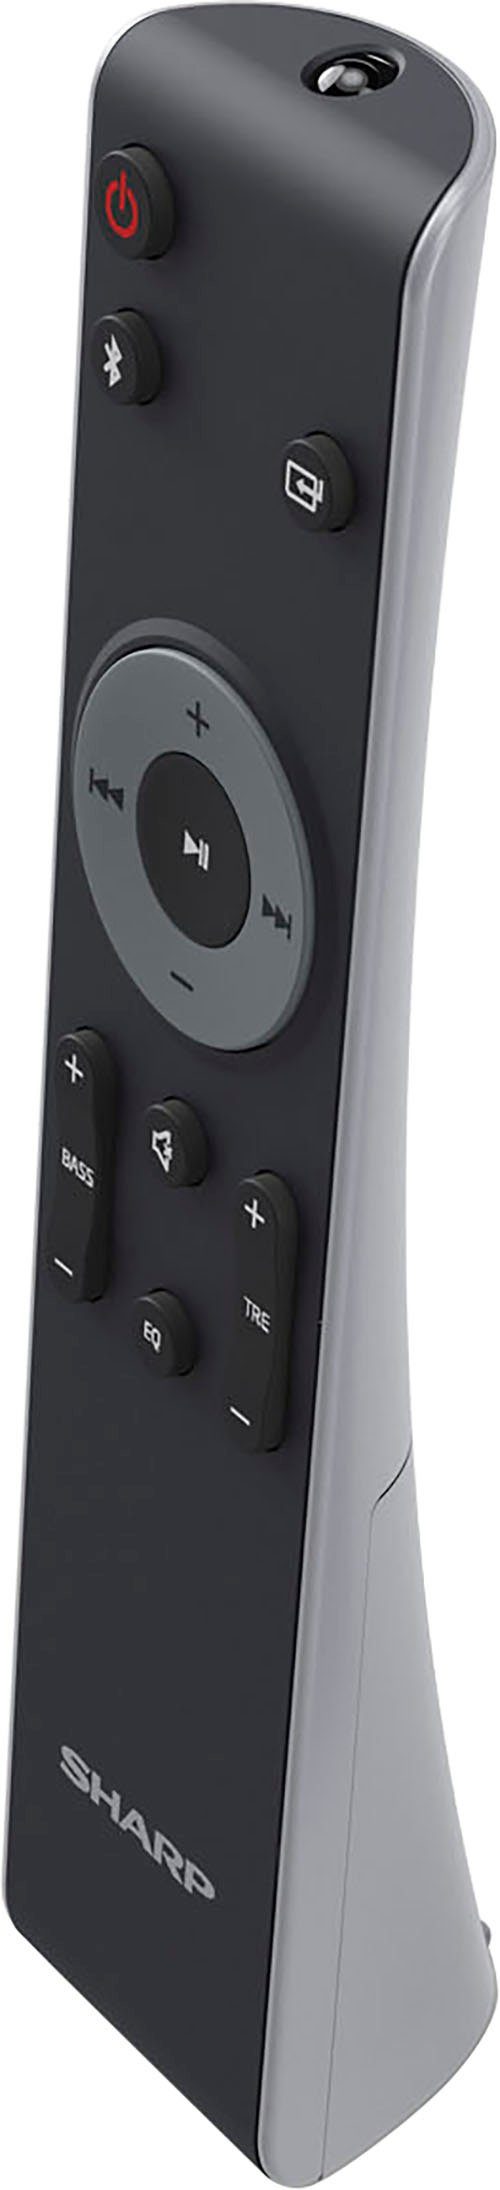 Sharp HT-SBW182 2.1 Soundbar 160 W) (Bluetooth